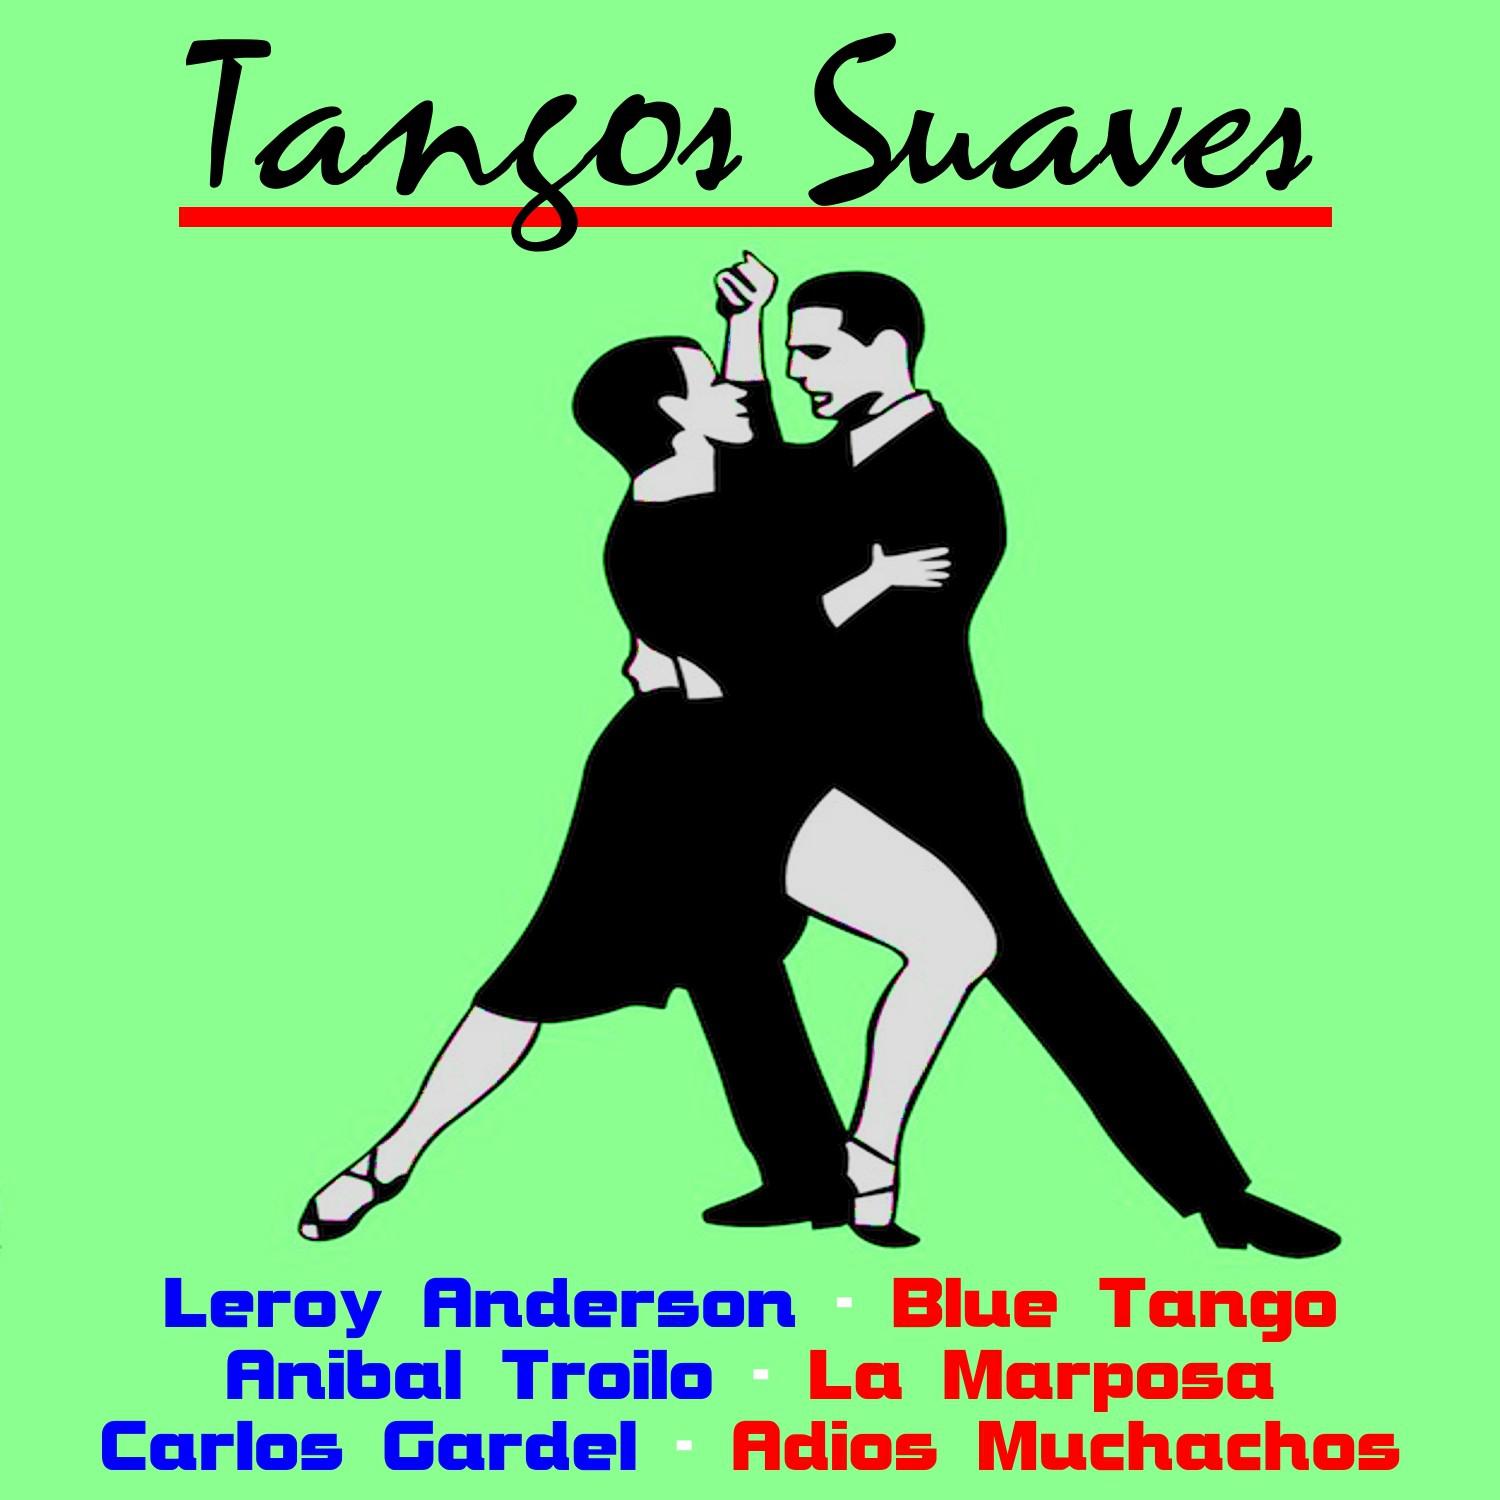 Tangos Suaves